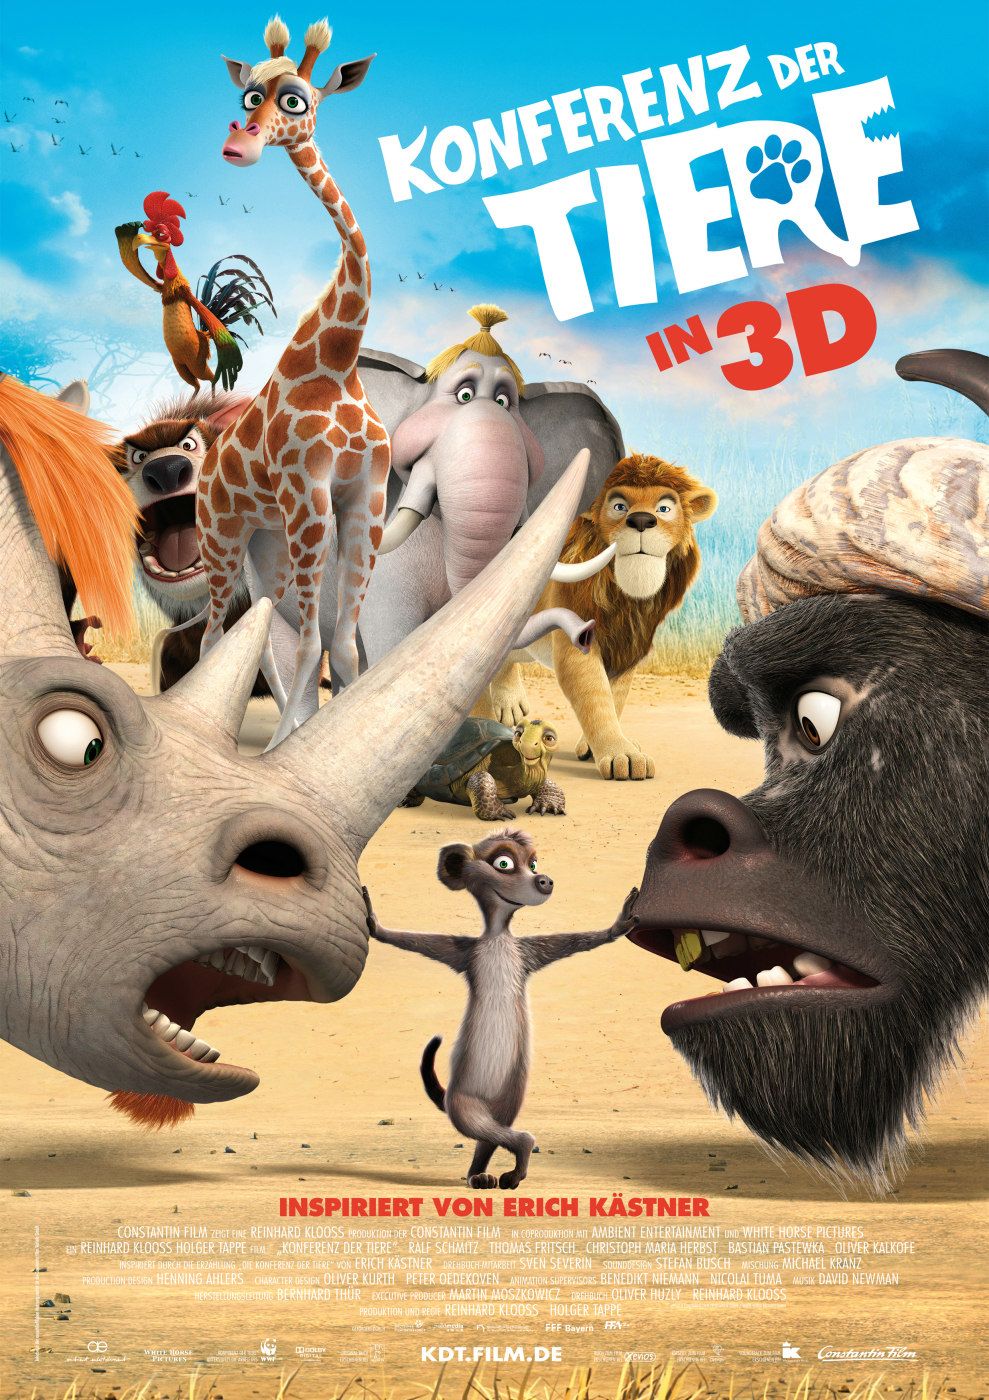 Extra Large Movie Poster Image for Die Konferenz der Tiere (#8 of 8)